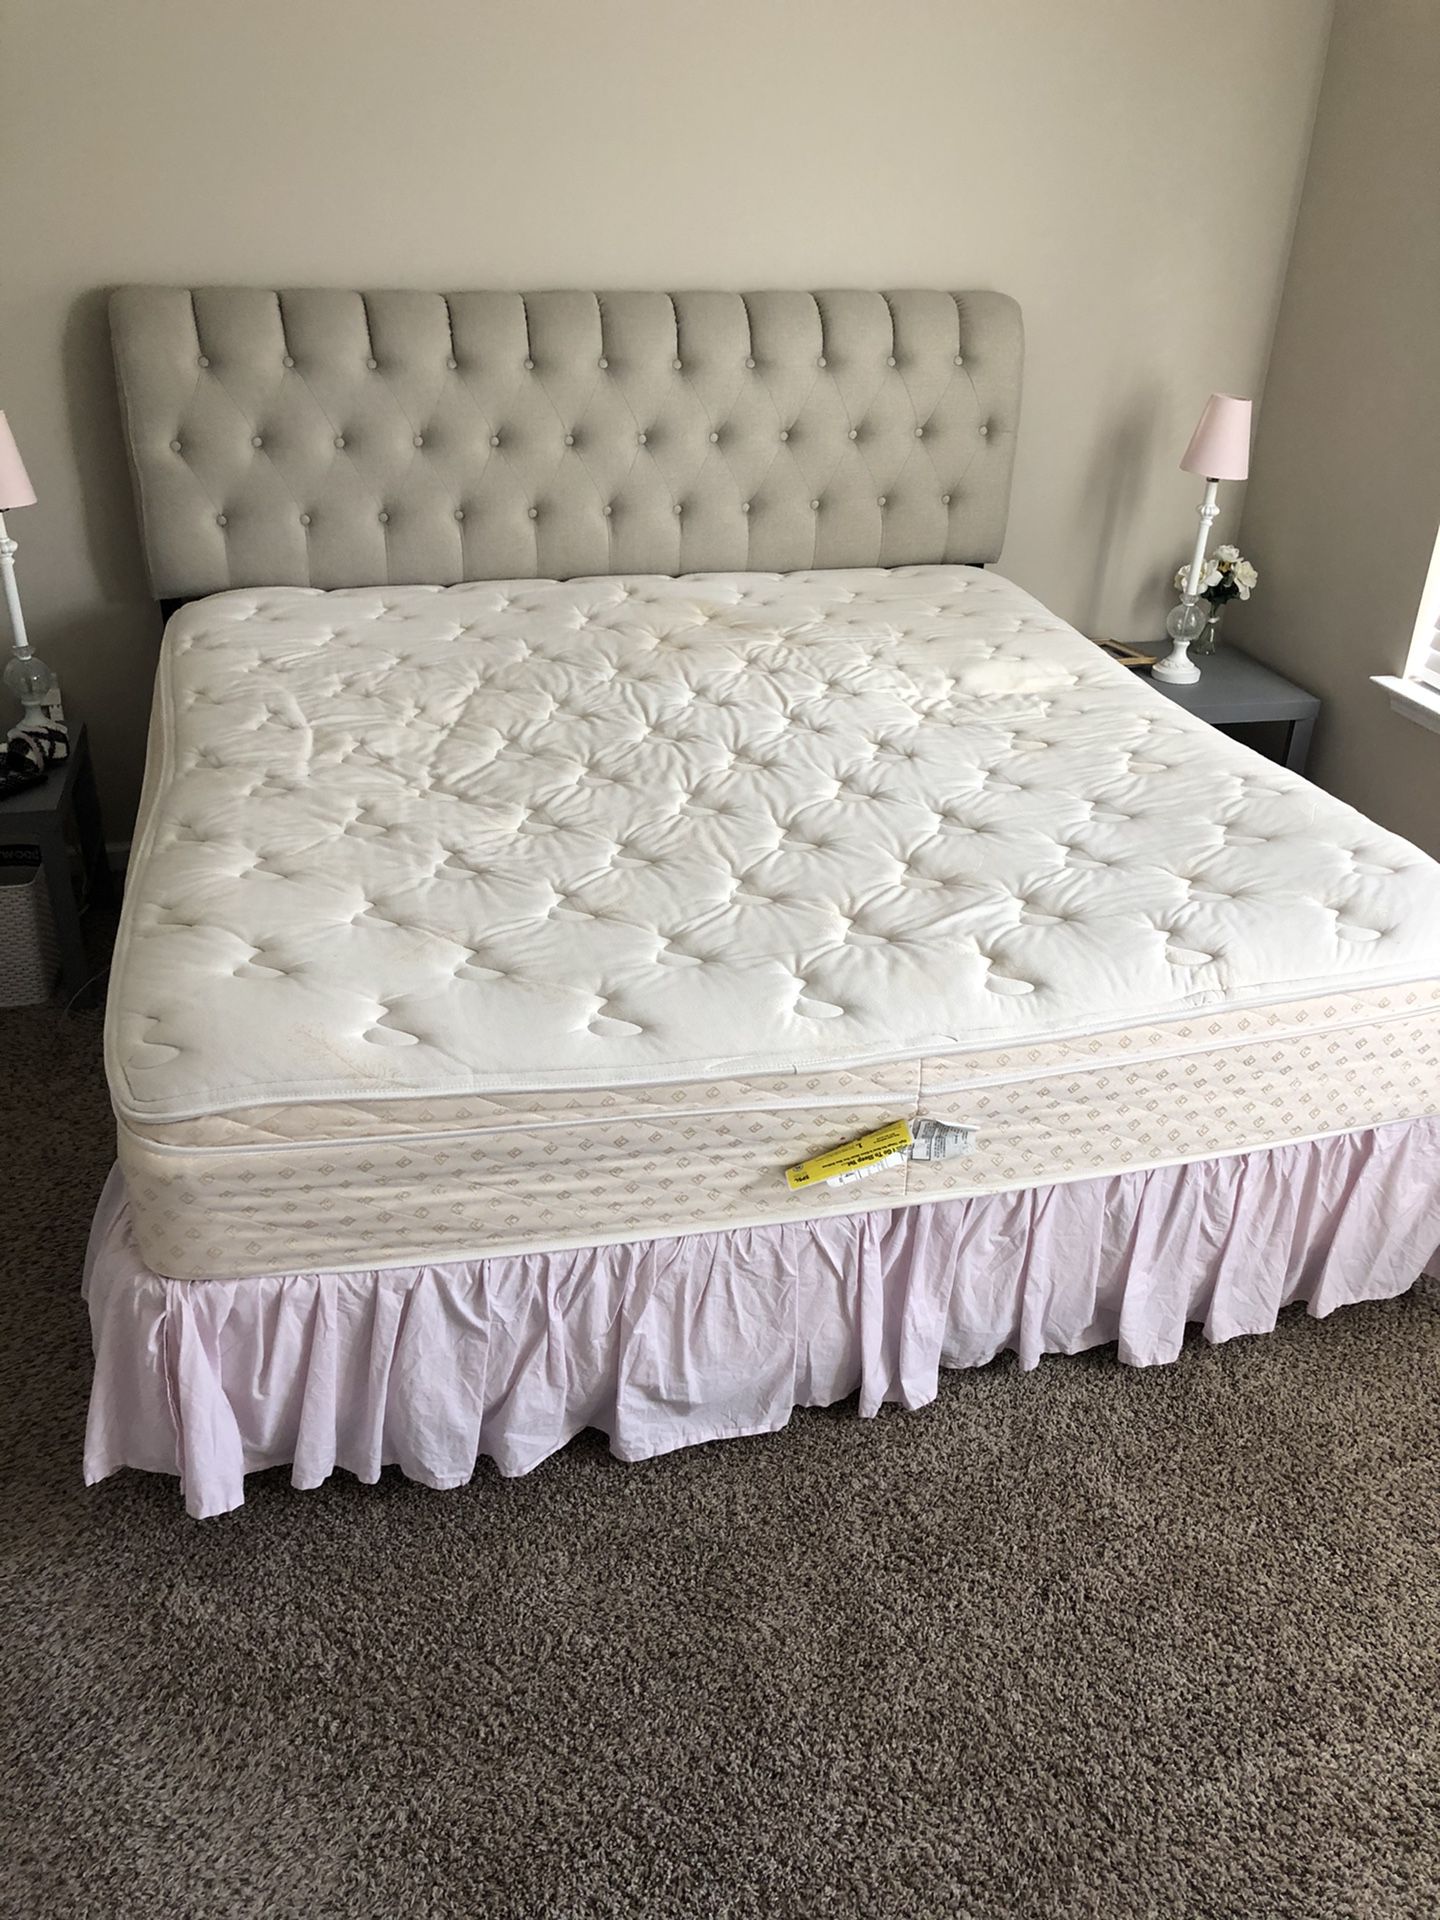 King size pillow top mattress and box spring set